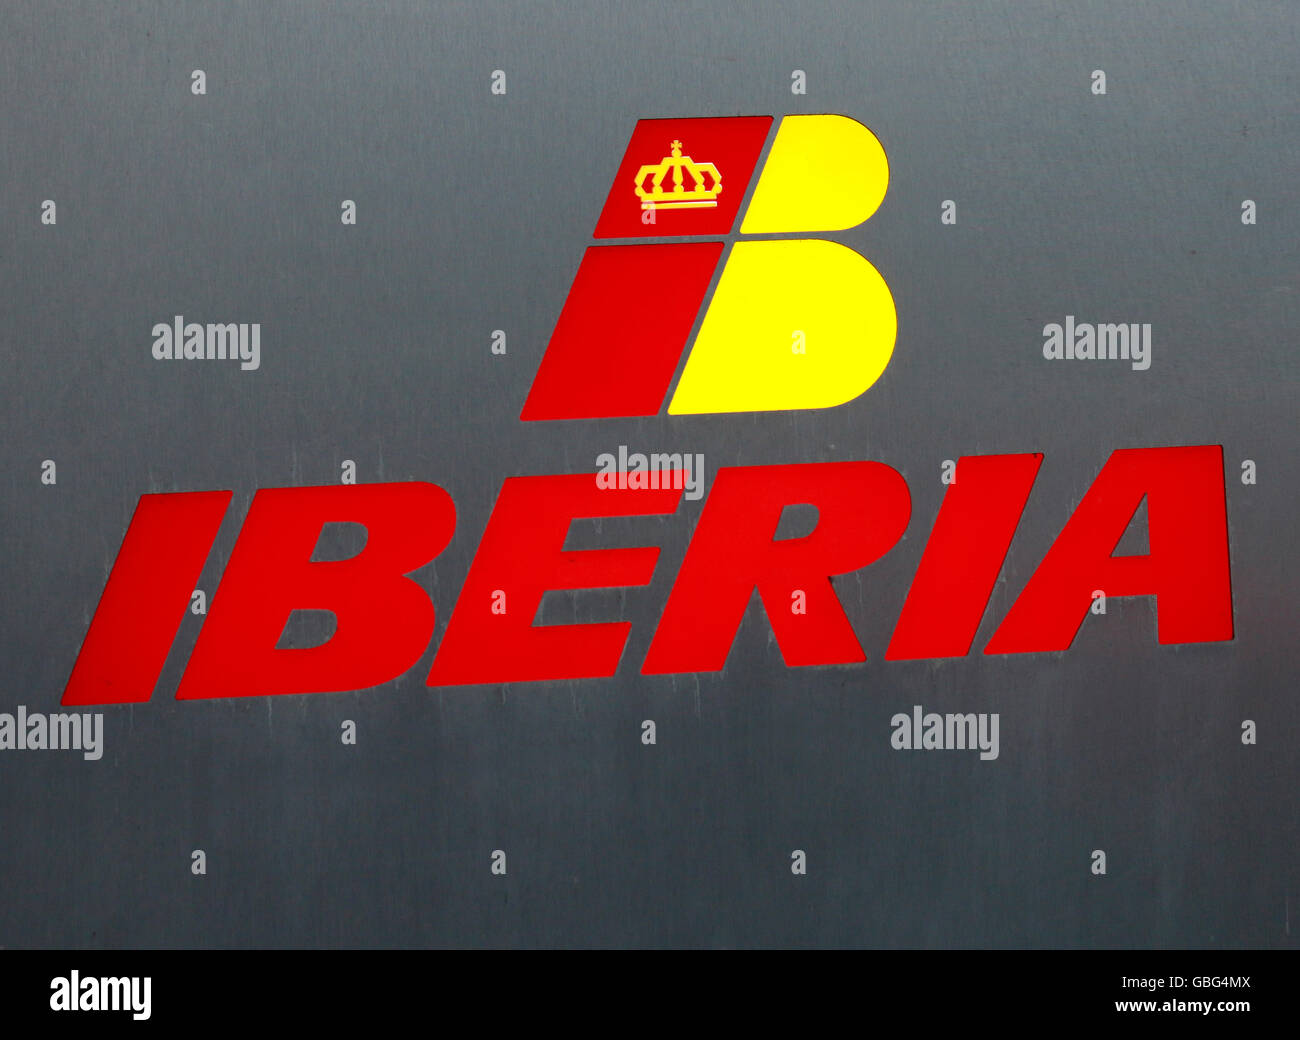 Das Logo der Marke "Iberia", Swinemuende, Polen. Foto Stock